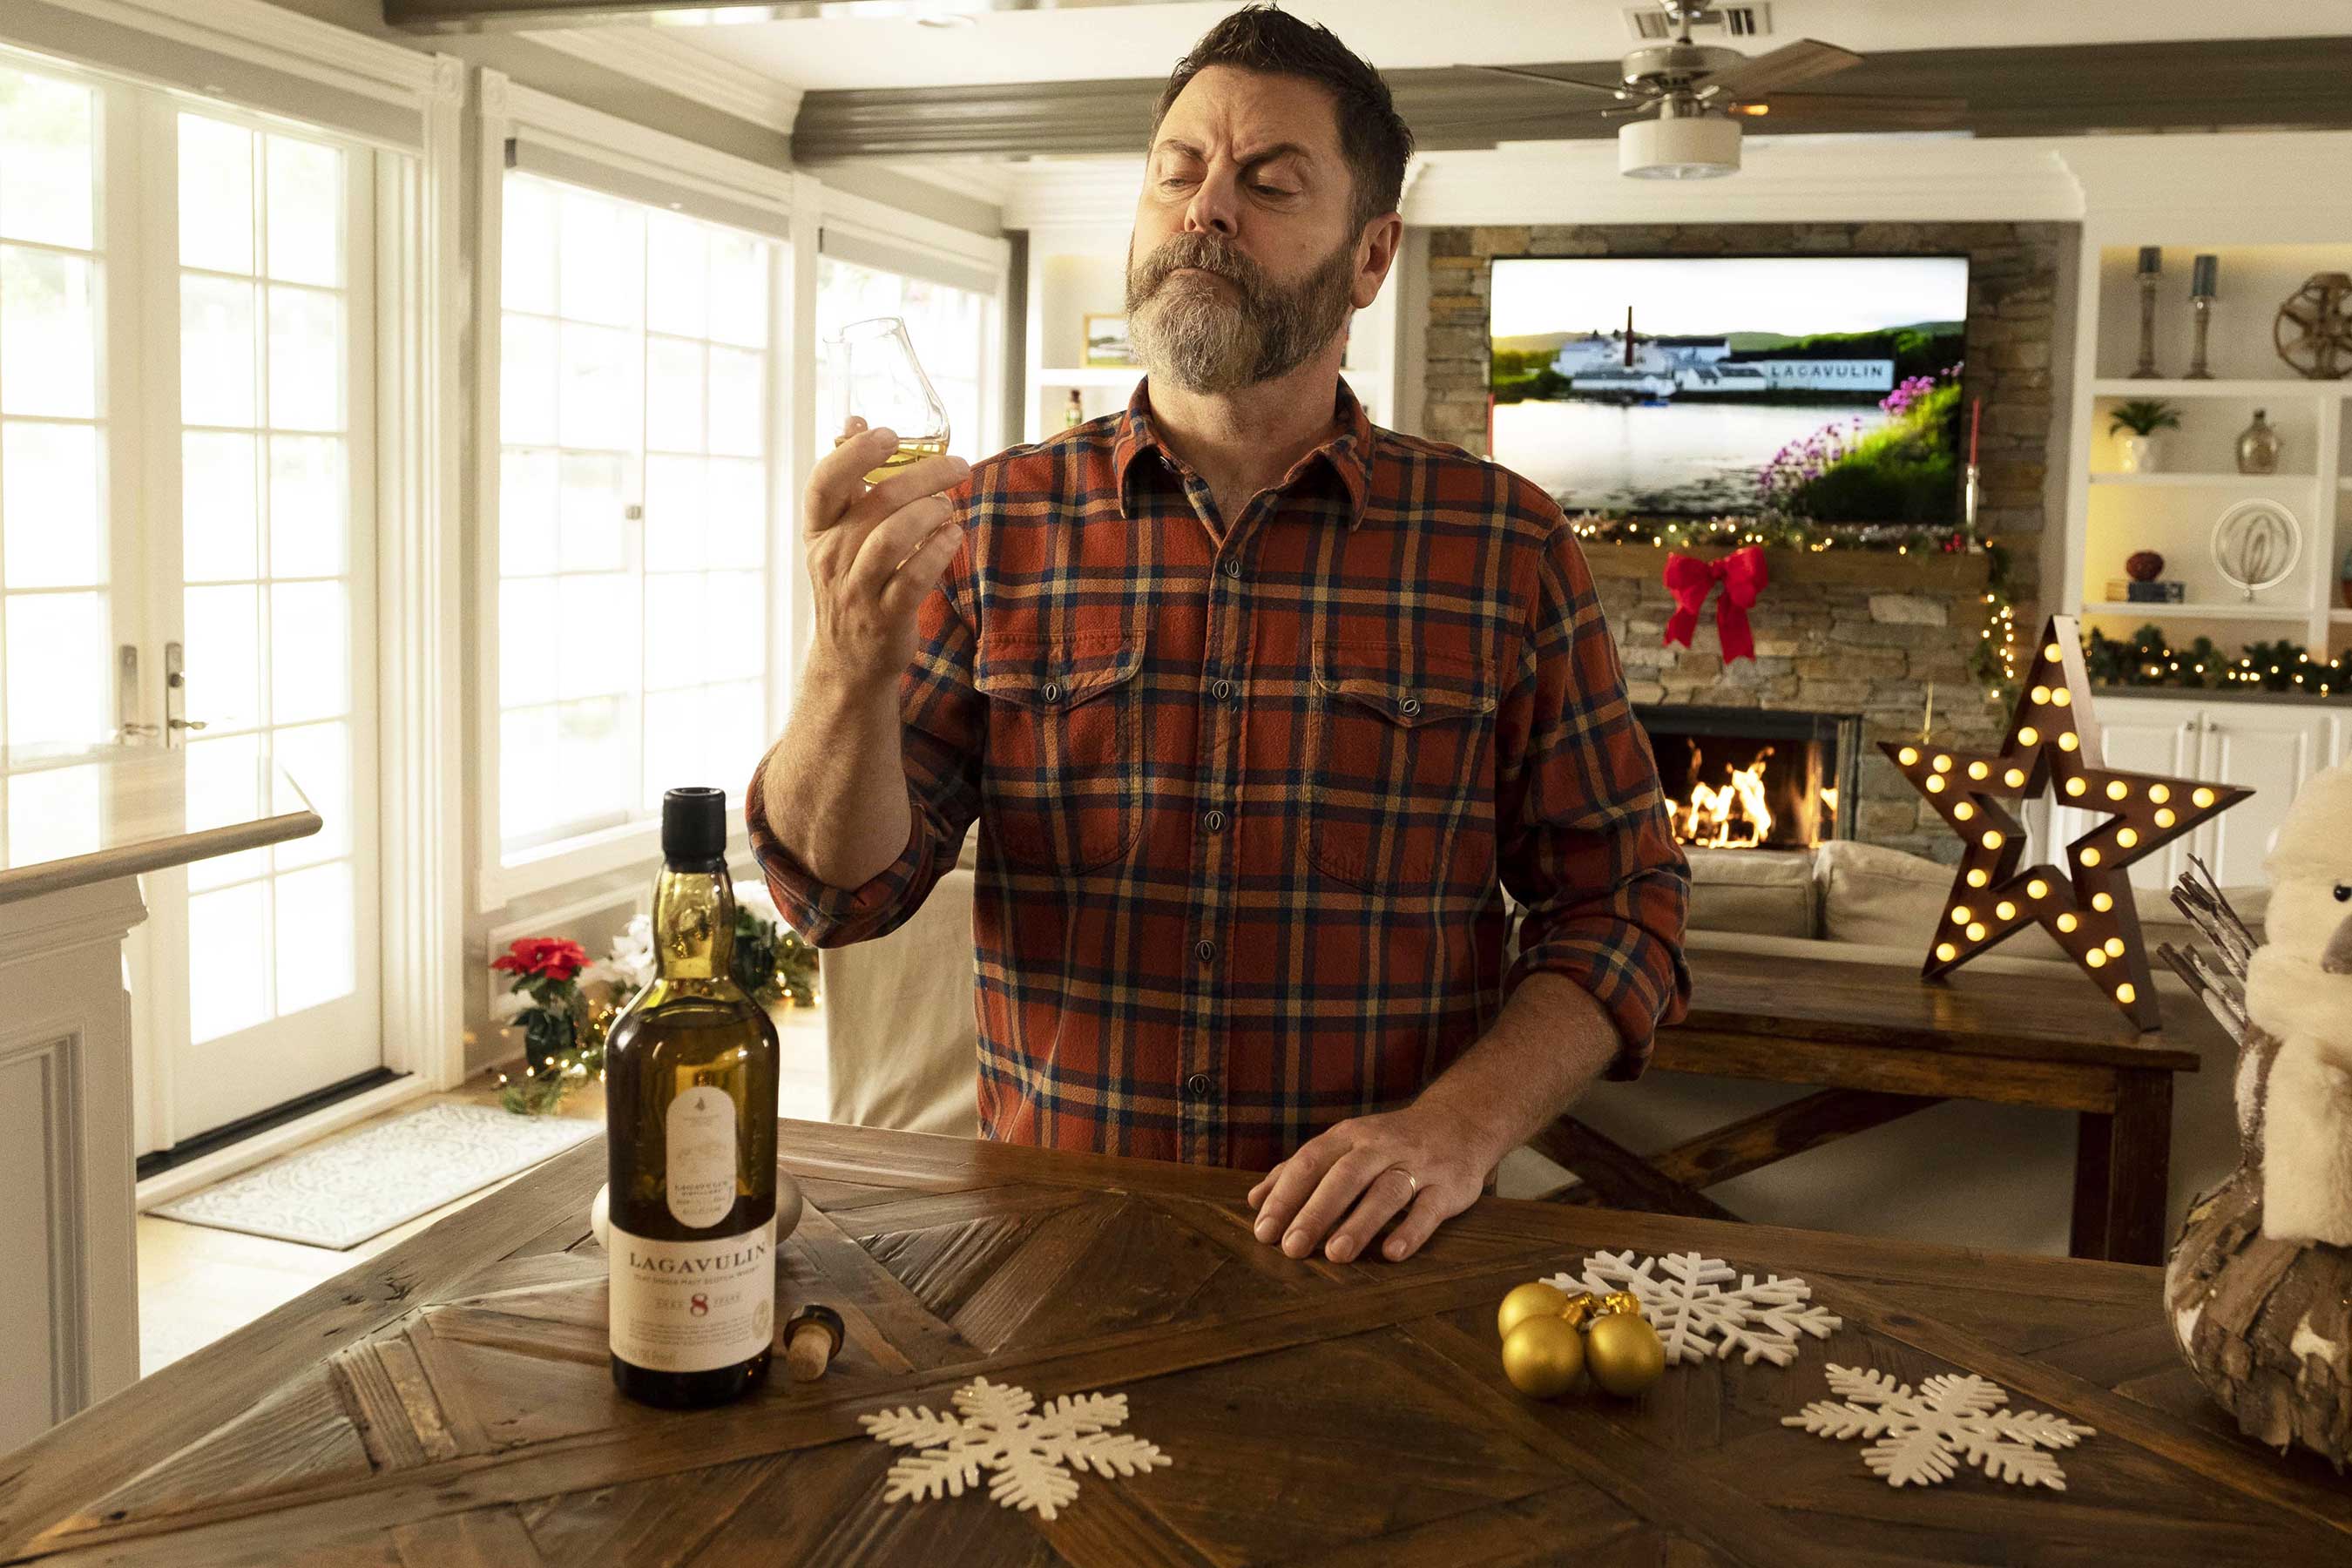 Nick Offerman admires a bottle of Lagavulin Single Malt Scotch Whisky